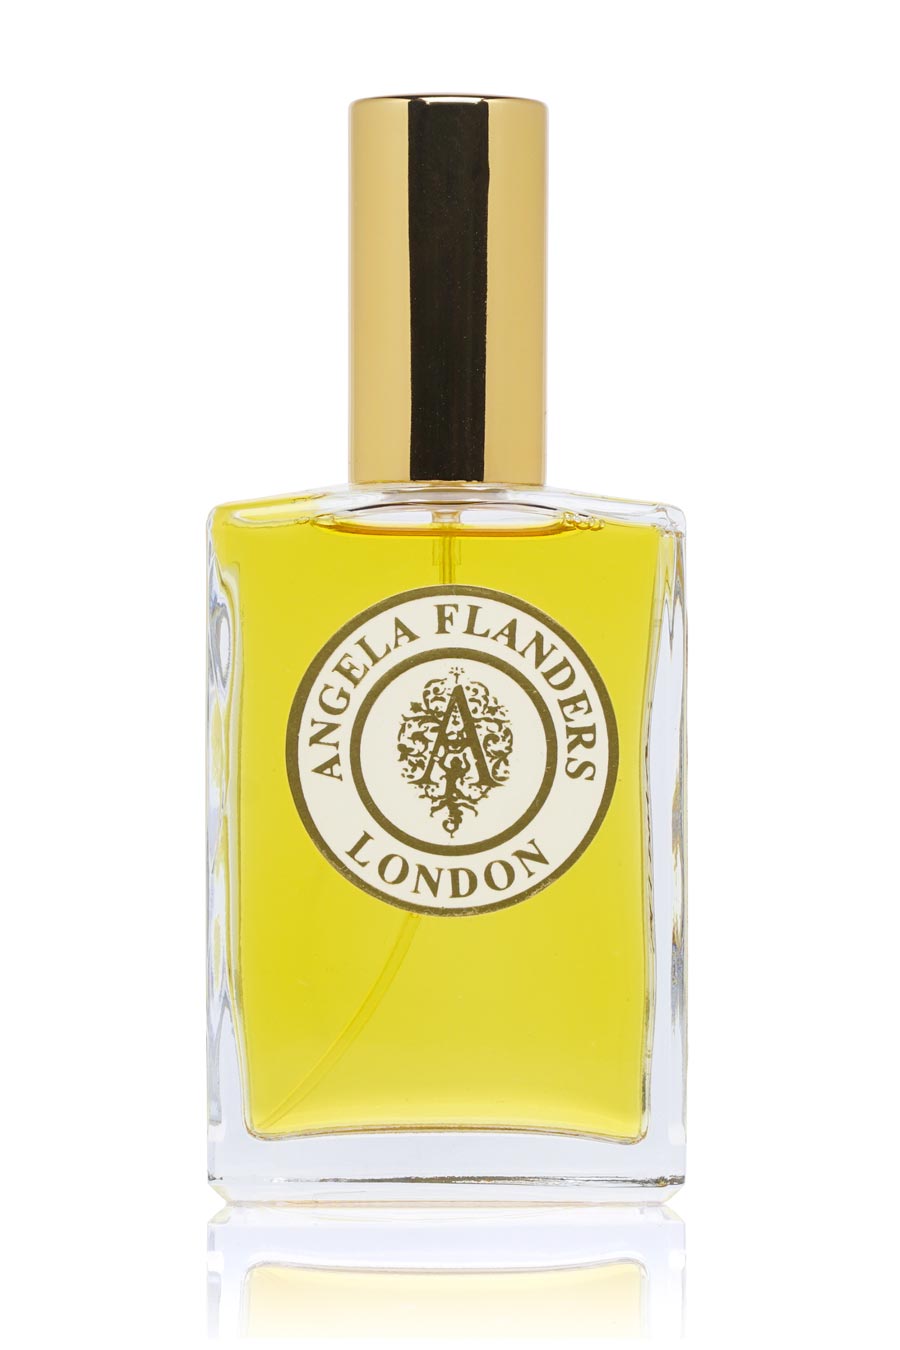 Angela Flanders Ottoman Eau de Parfum 50ml